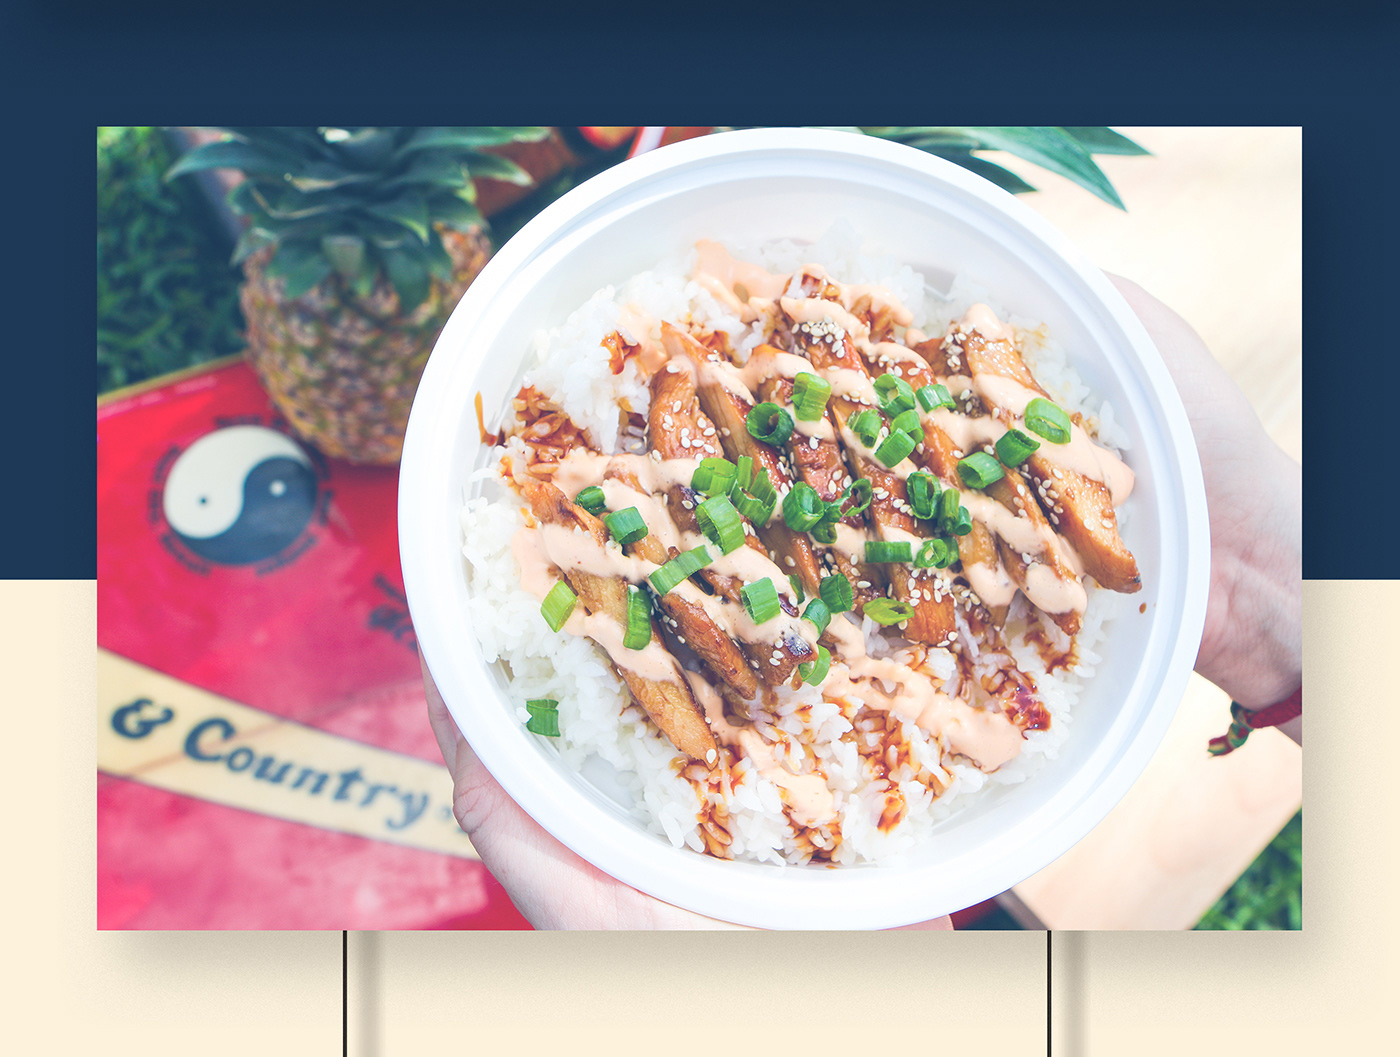 HAWAII poke cuisine restaurant menu Packaging animation  lokal moko Food 